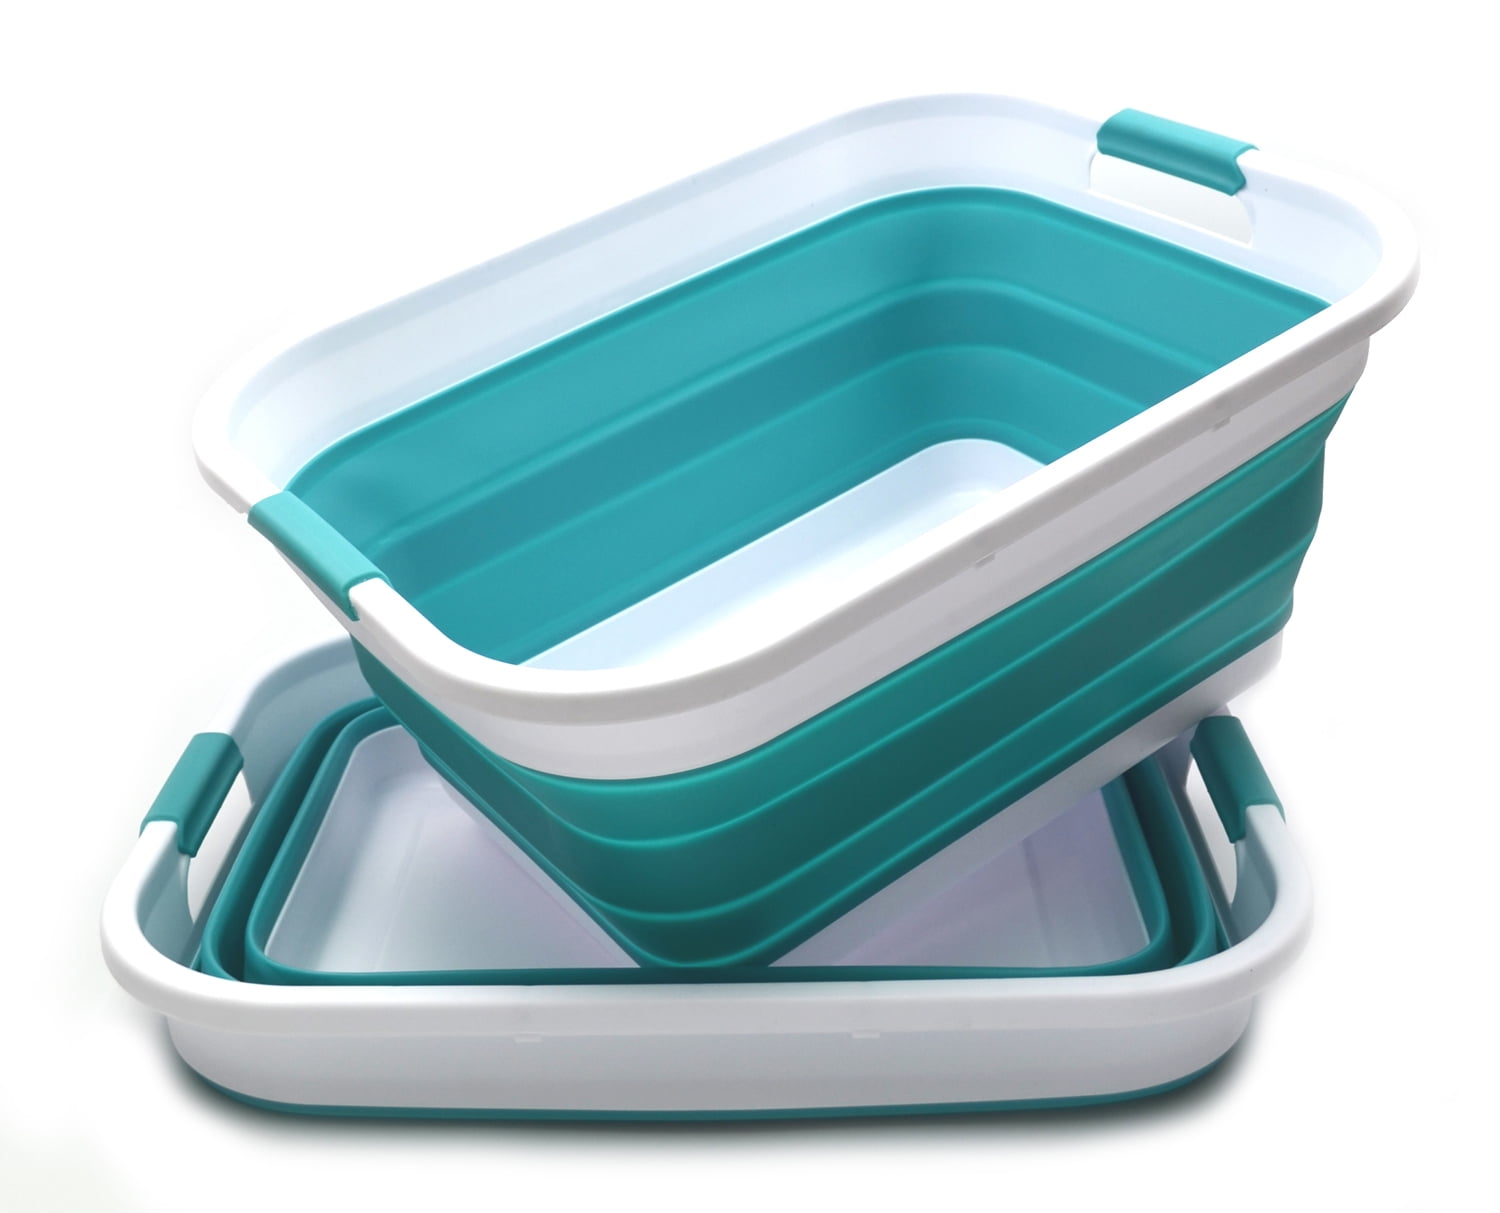 Space Saving Laundry Hamper Foldable Storage Container/Organizer Oval Tub/Basket Portable Washing Tub Grey, 2 SAMMART Set of 2 Collapsible Plastic Laundry Basket